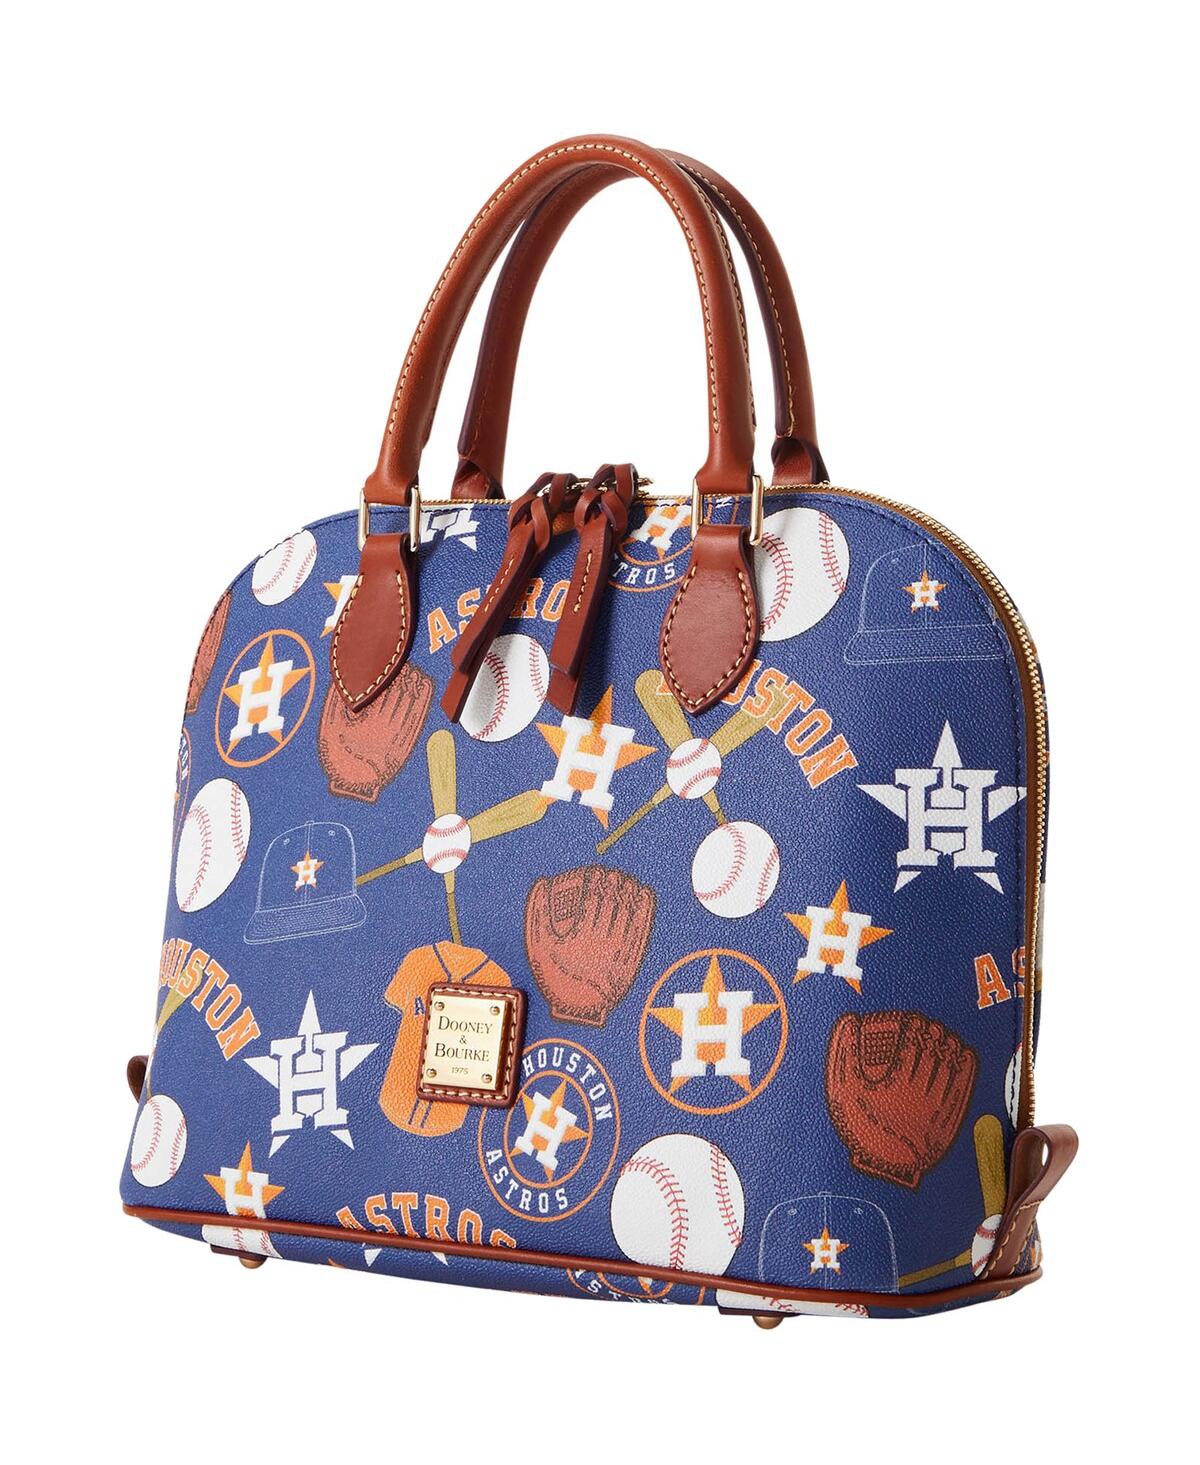 Dooney & Bourke Astros Backpack in Blue